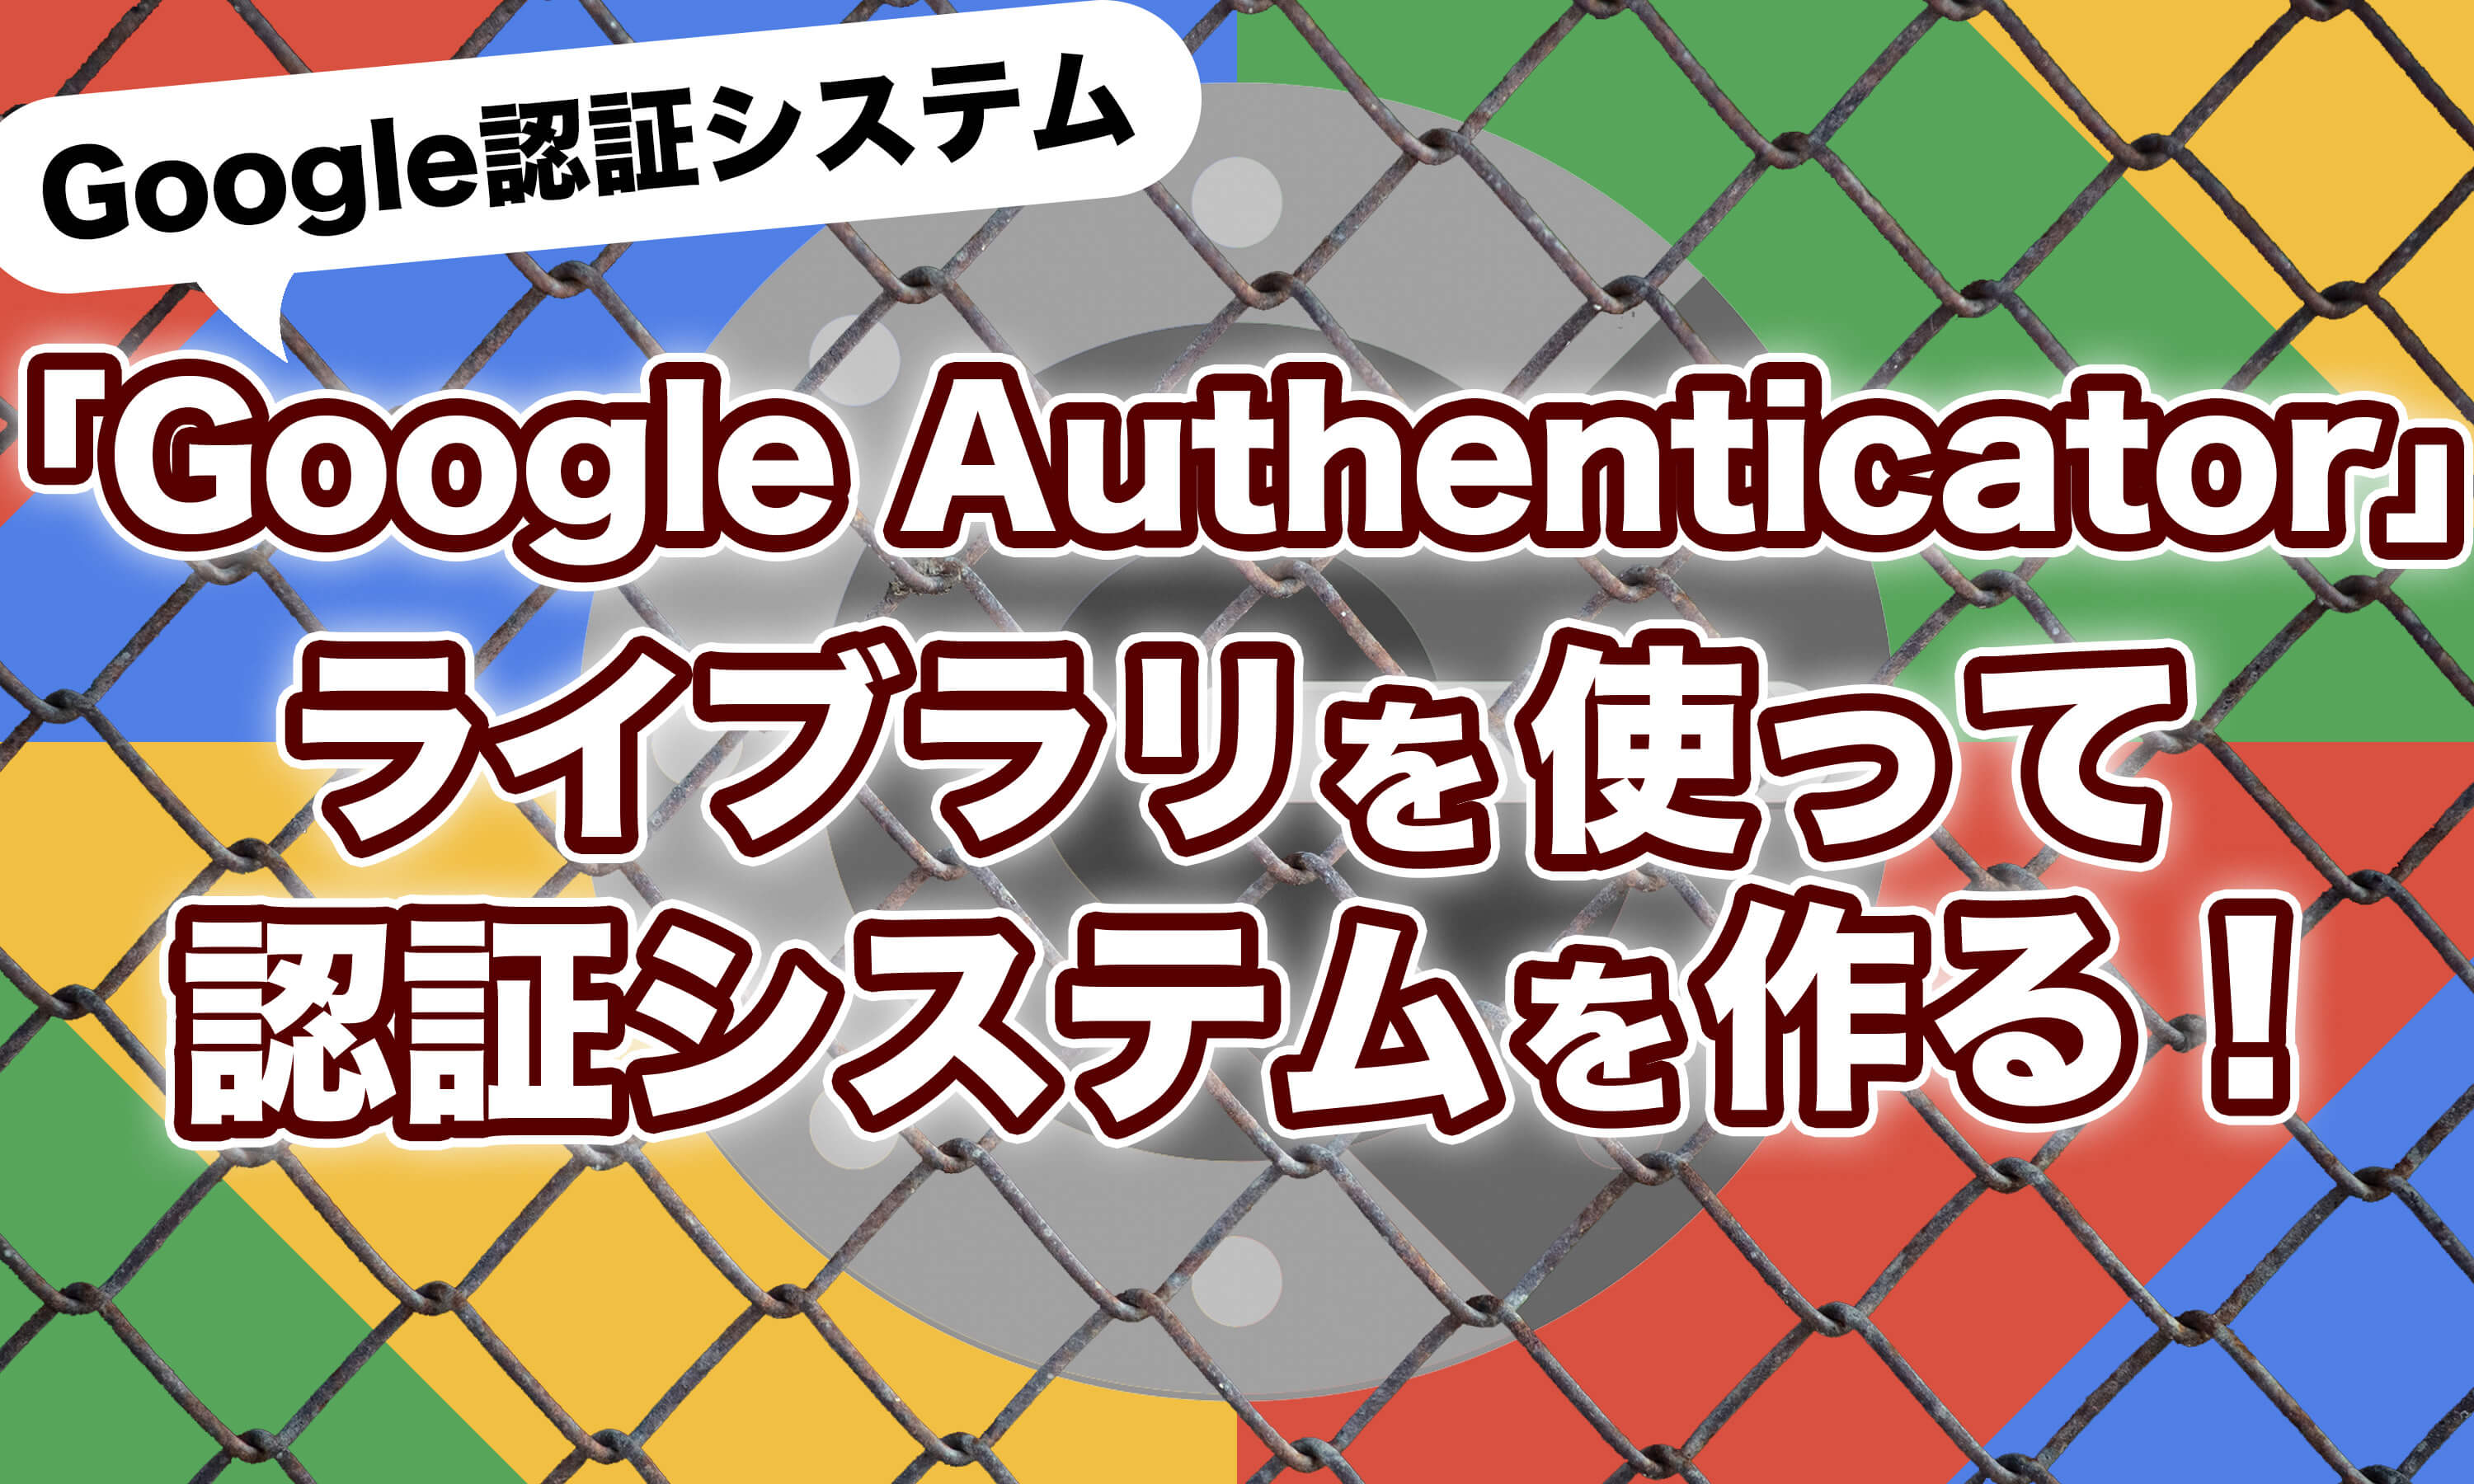 「Google Authenticator」ライブラリを使って認証システムを作ります。